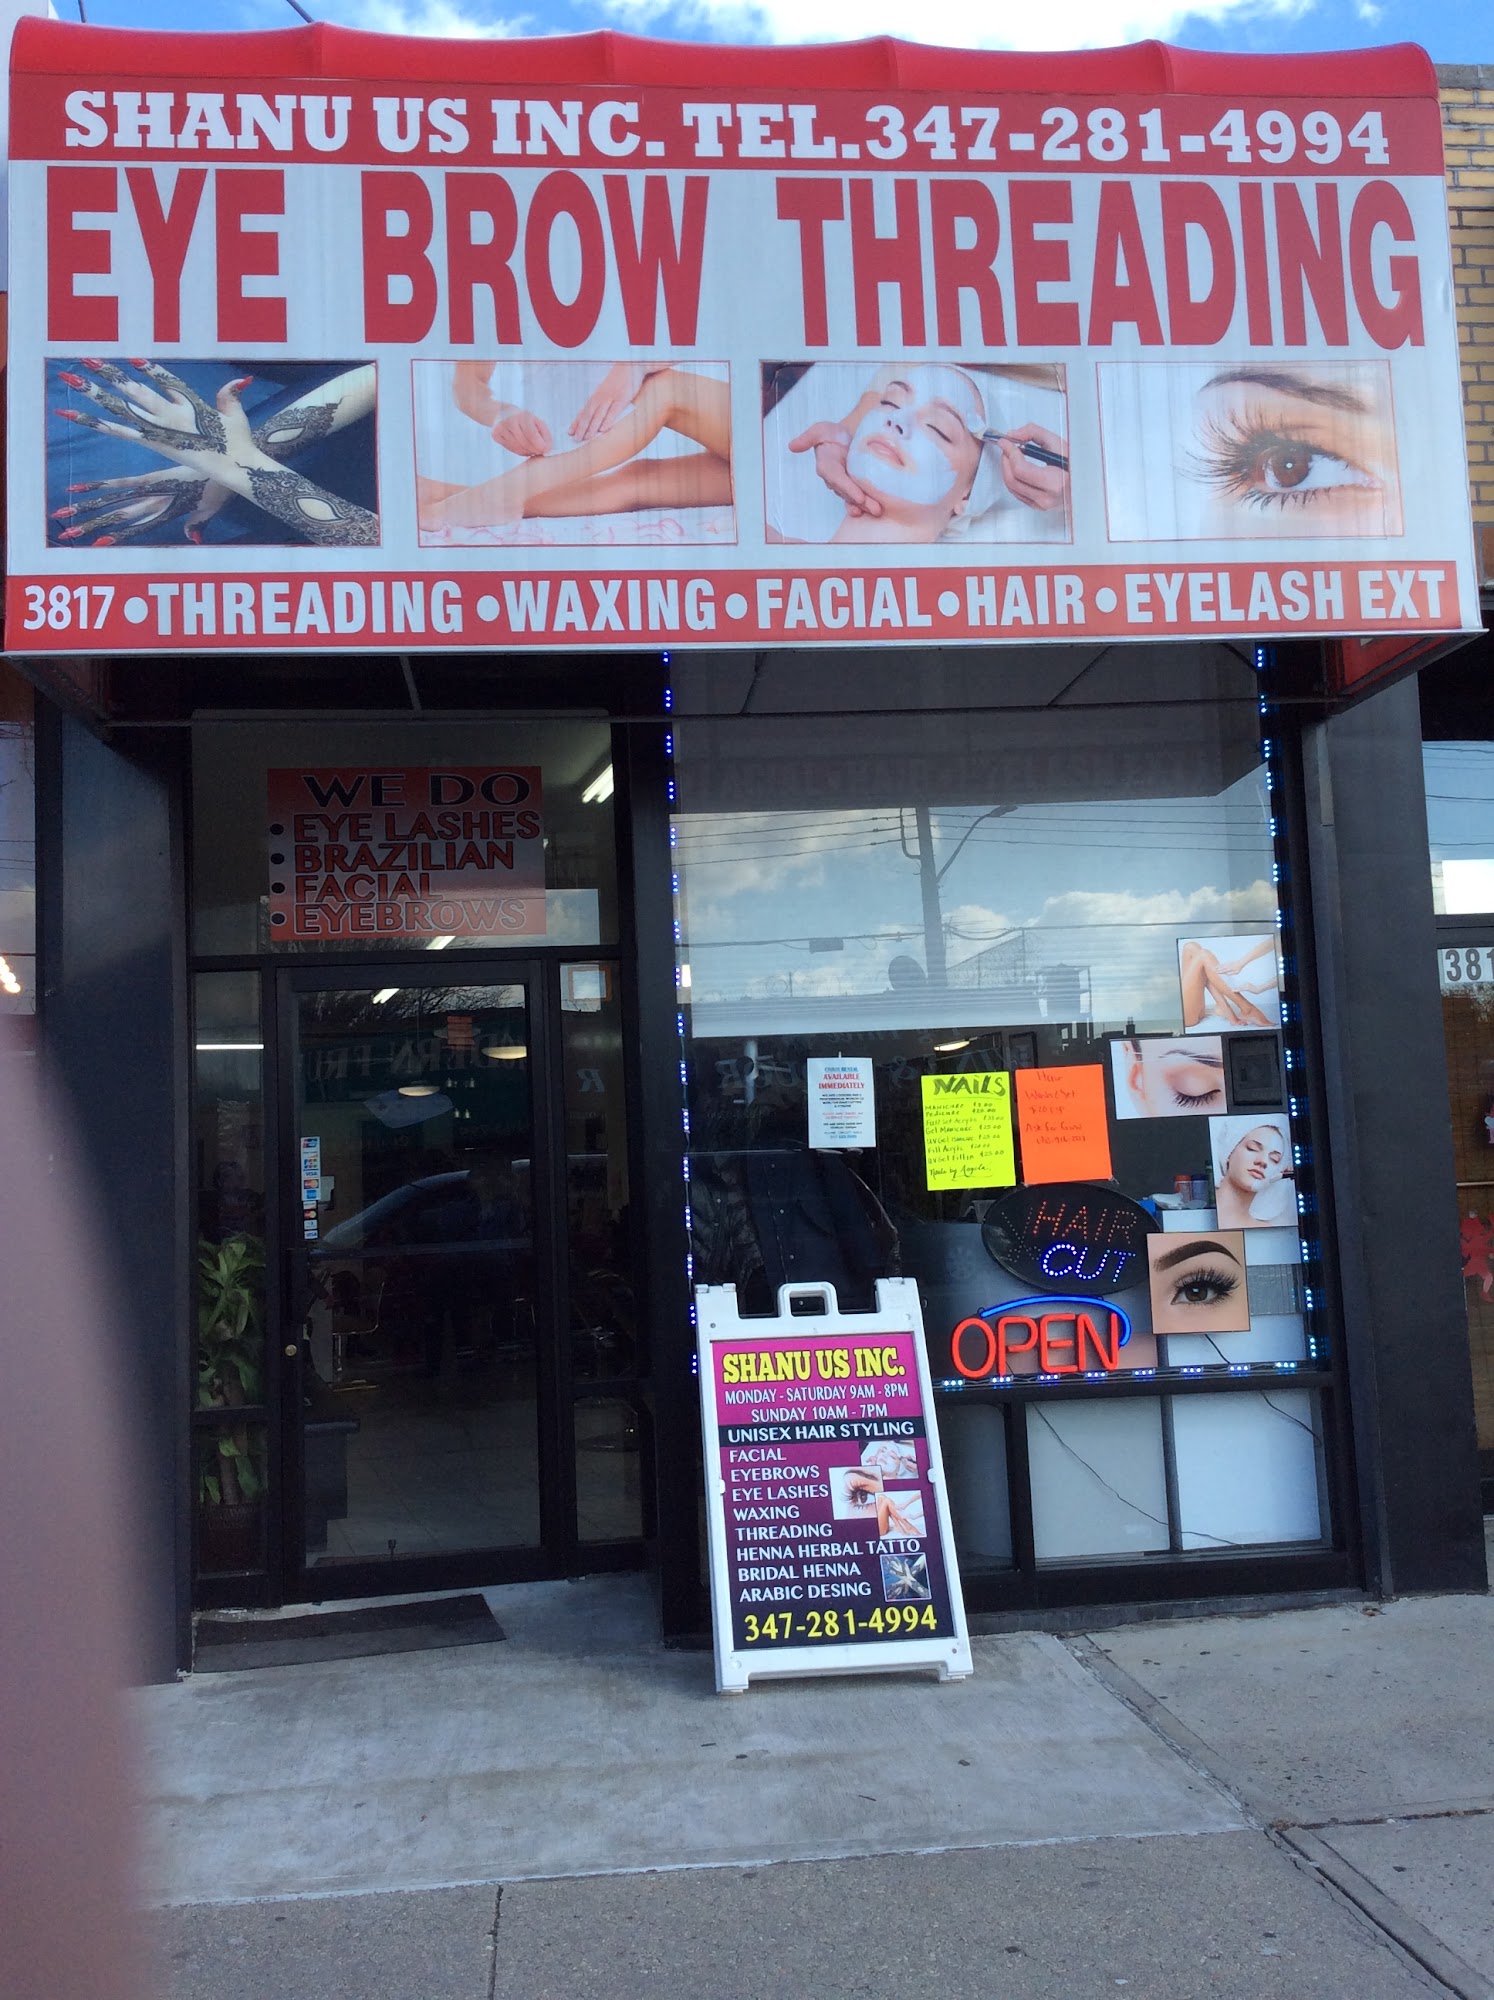 Shanu Eyebrow Threading and Full service Salon